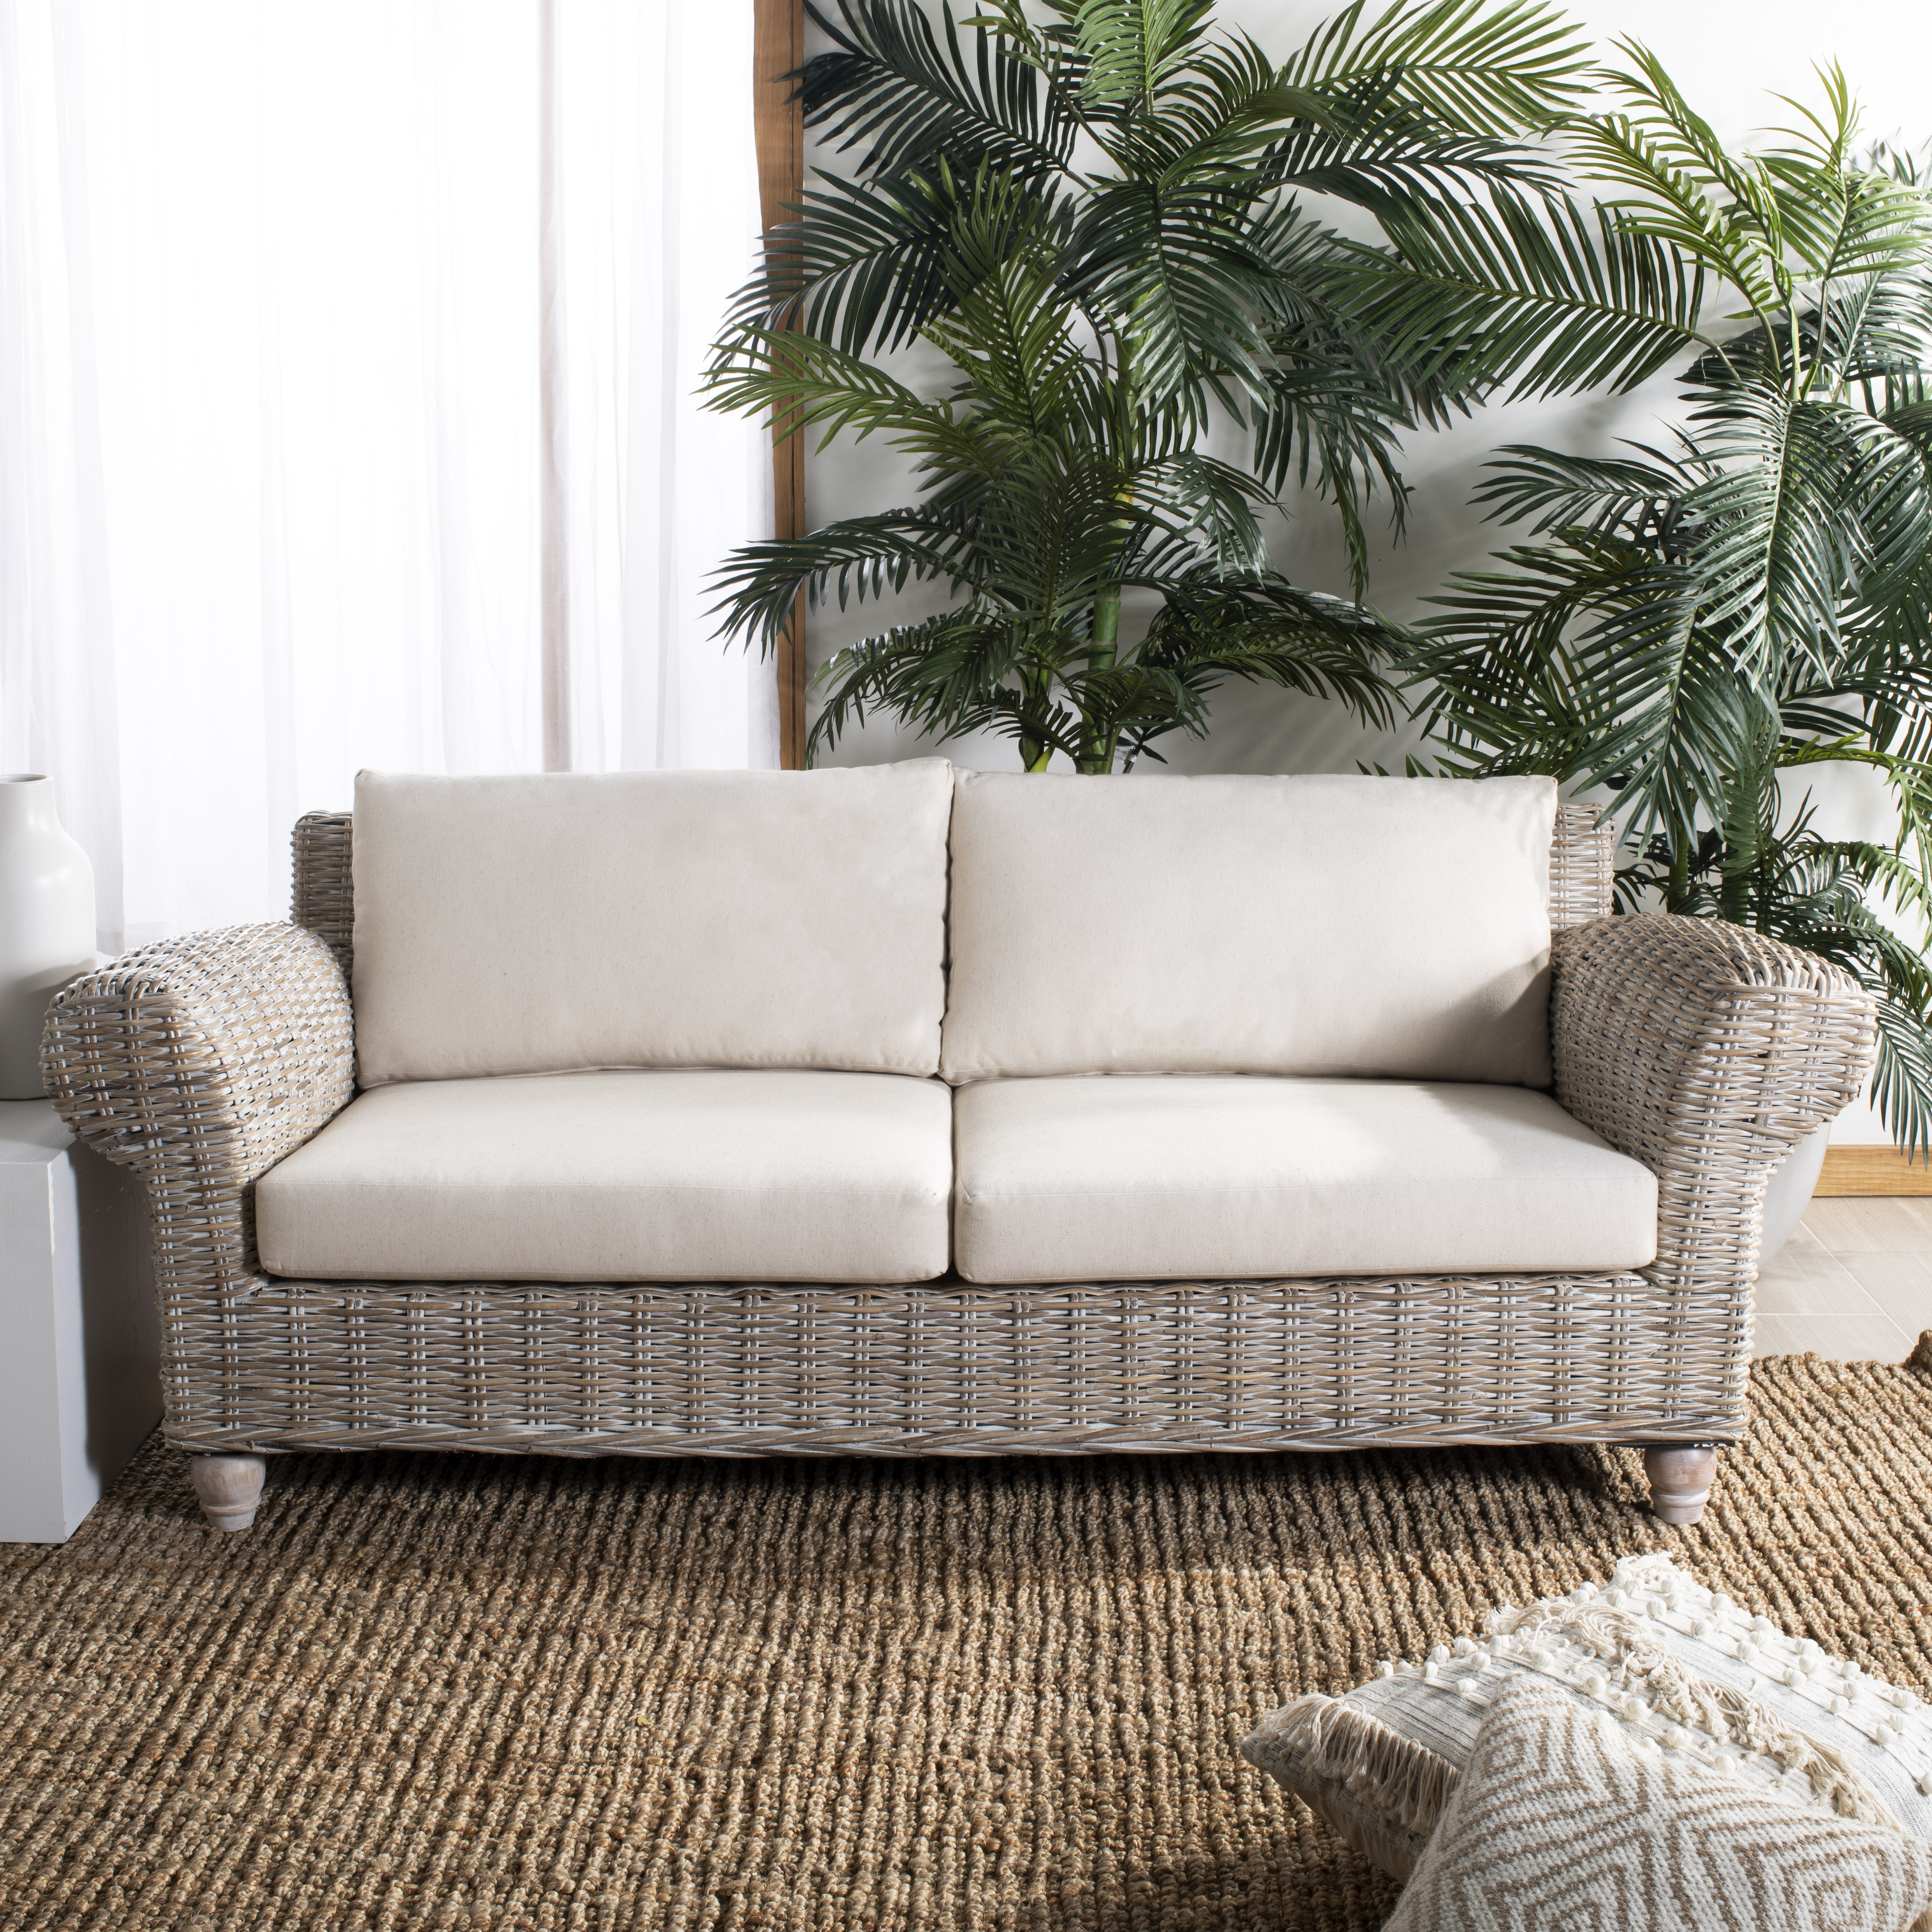 Tahiti Wicker 2.5 Seater Sofa - White Wash/Beige - Arlo Home - Image 2